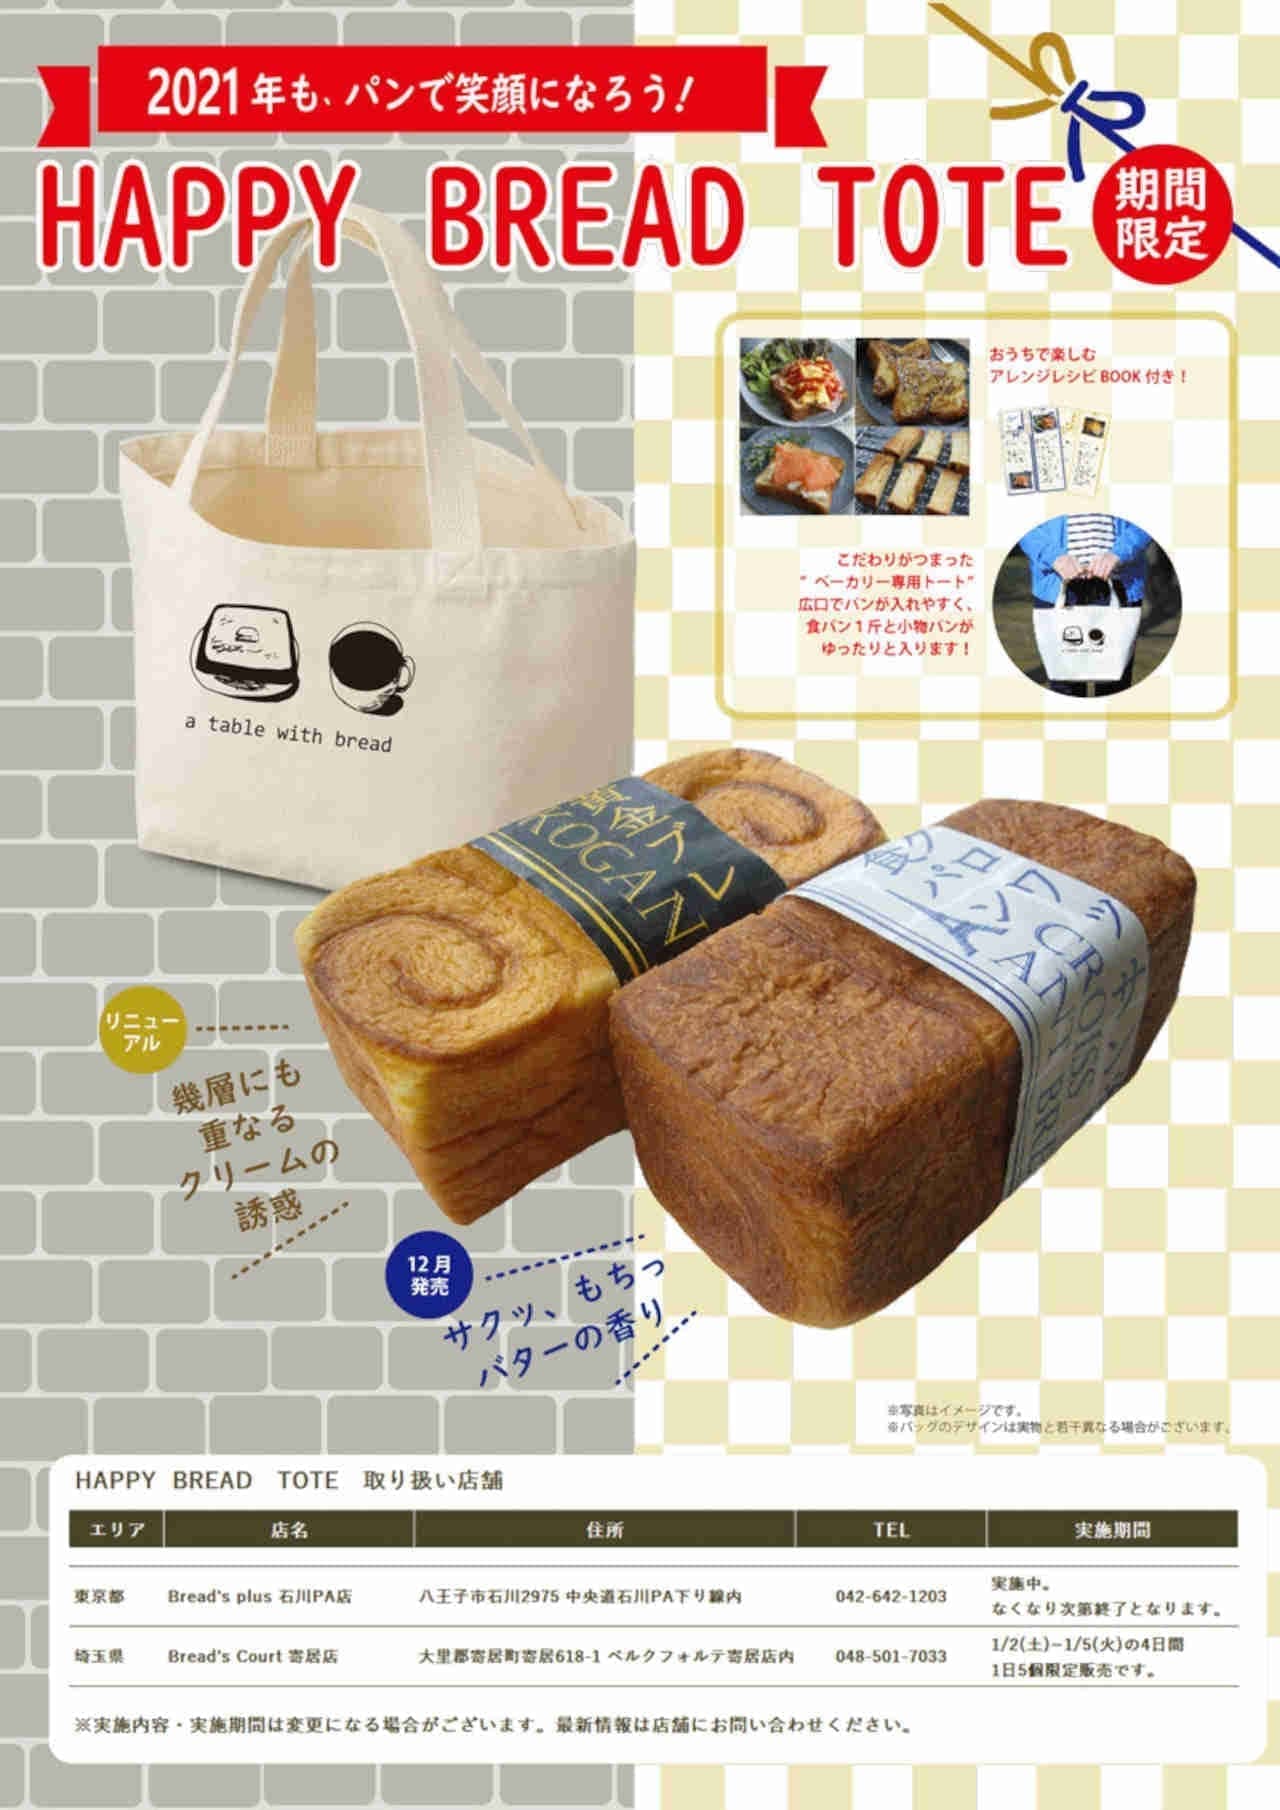 Kobeya "HAPPY BREAD TOTE" period / store limited